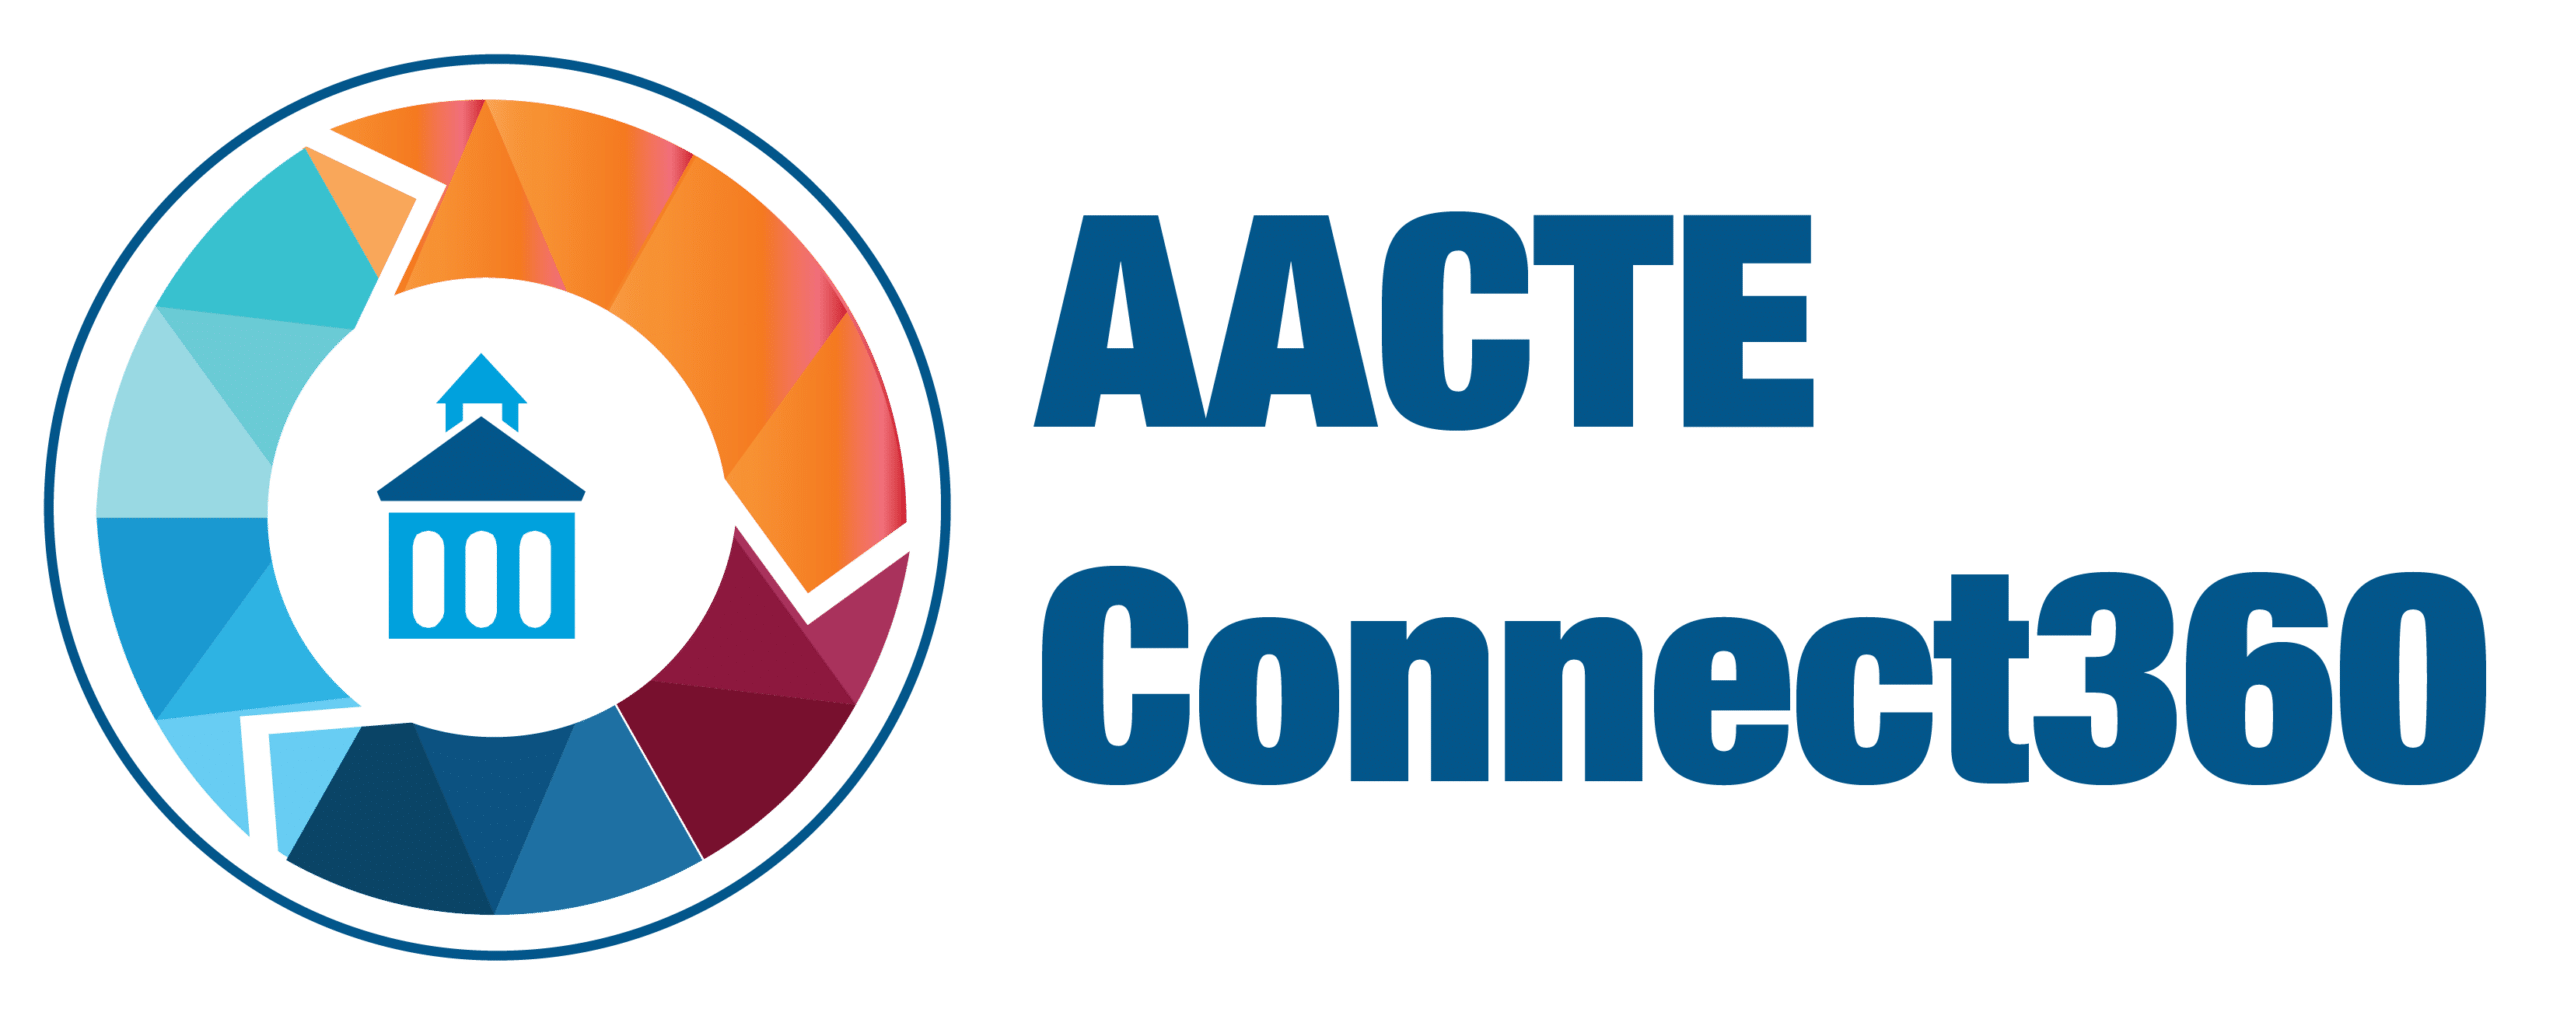 AACTE Connect360 logo